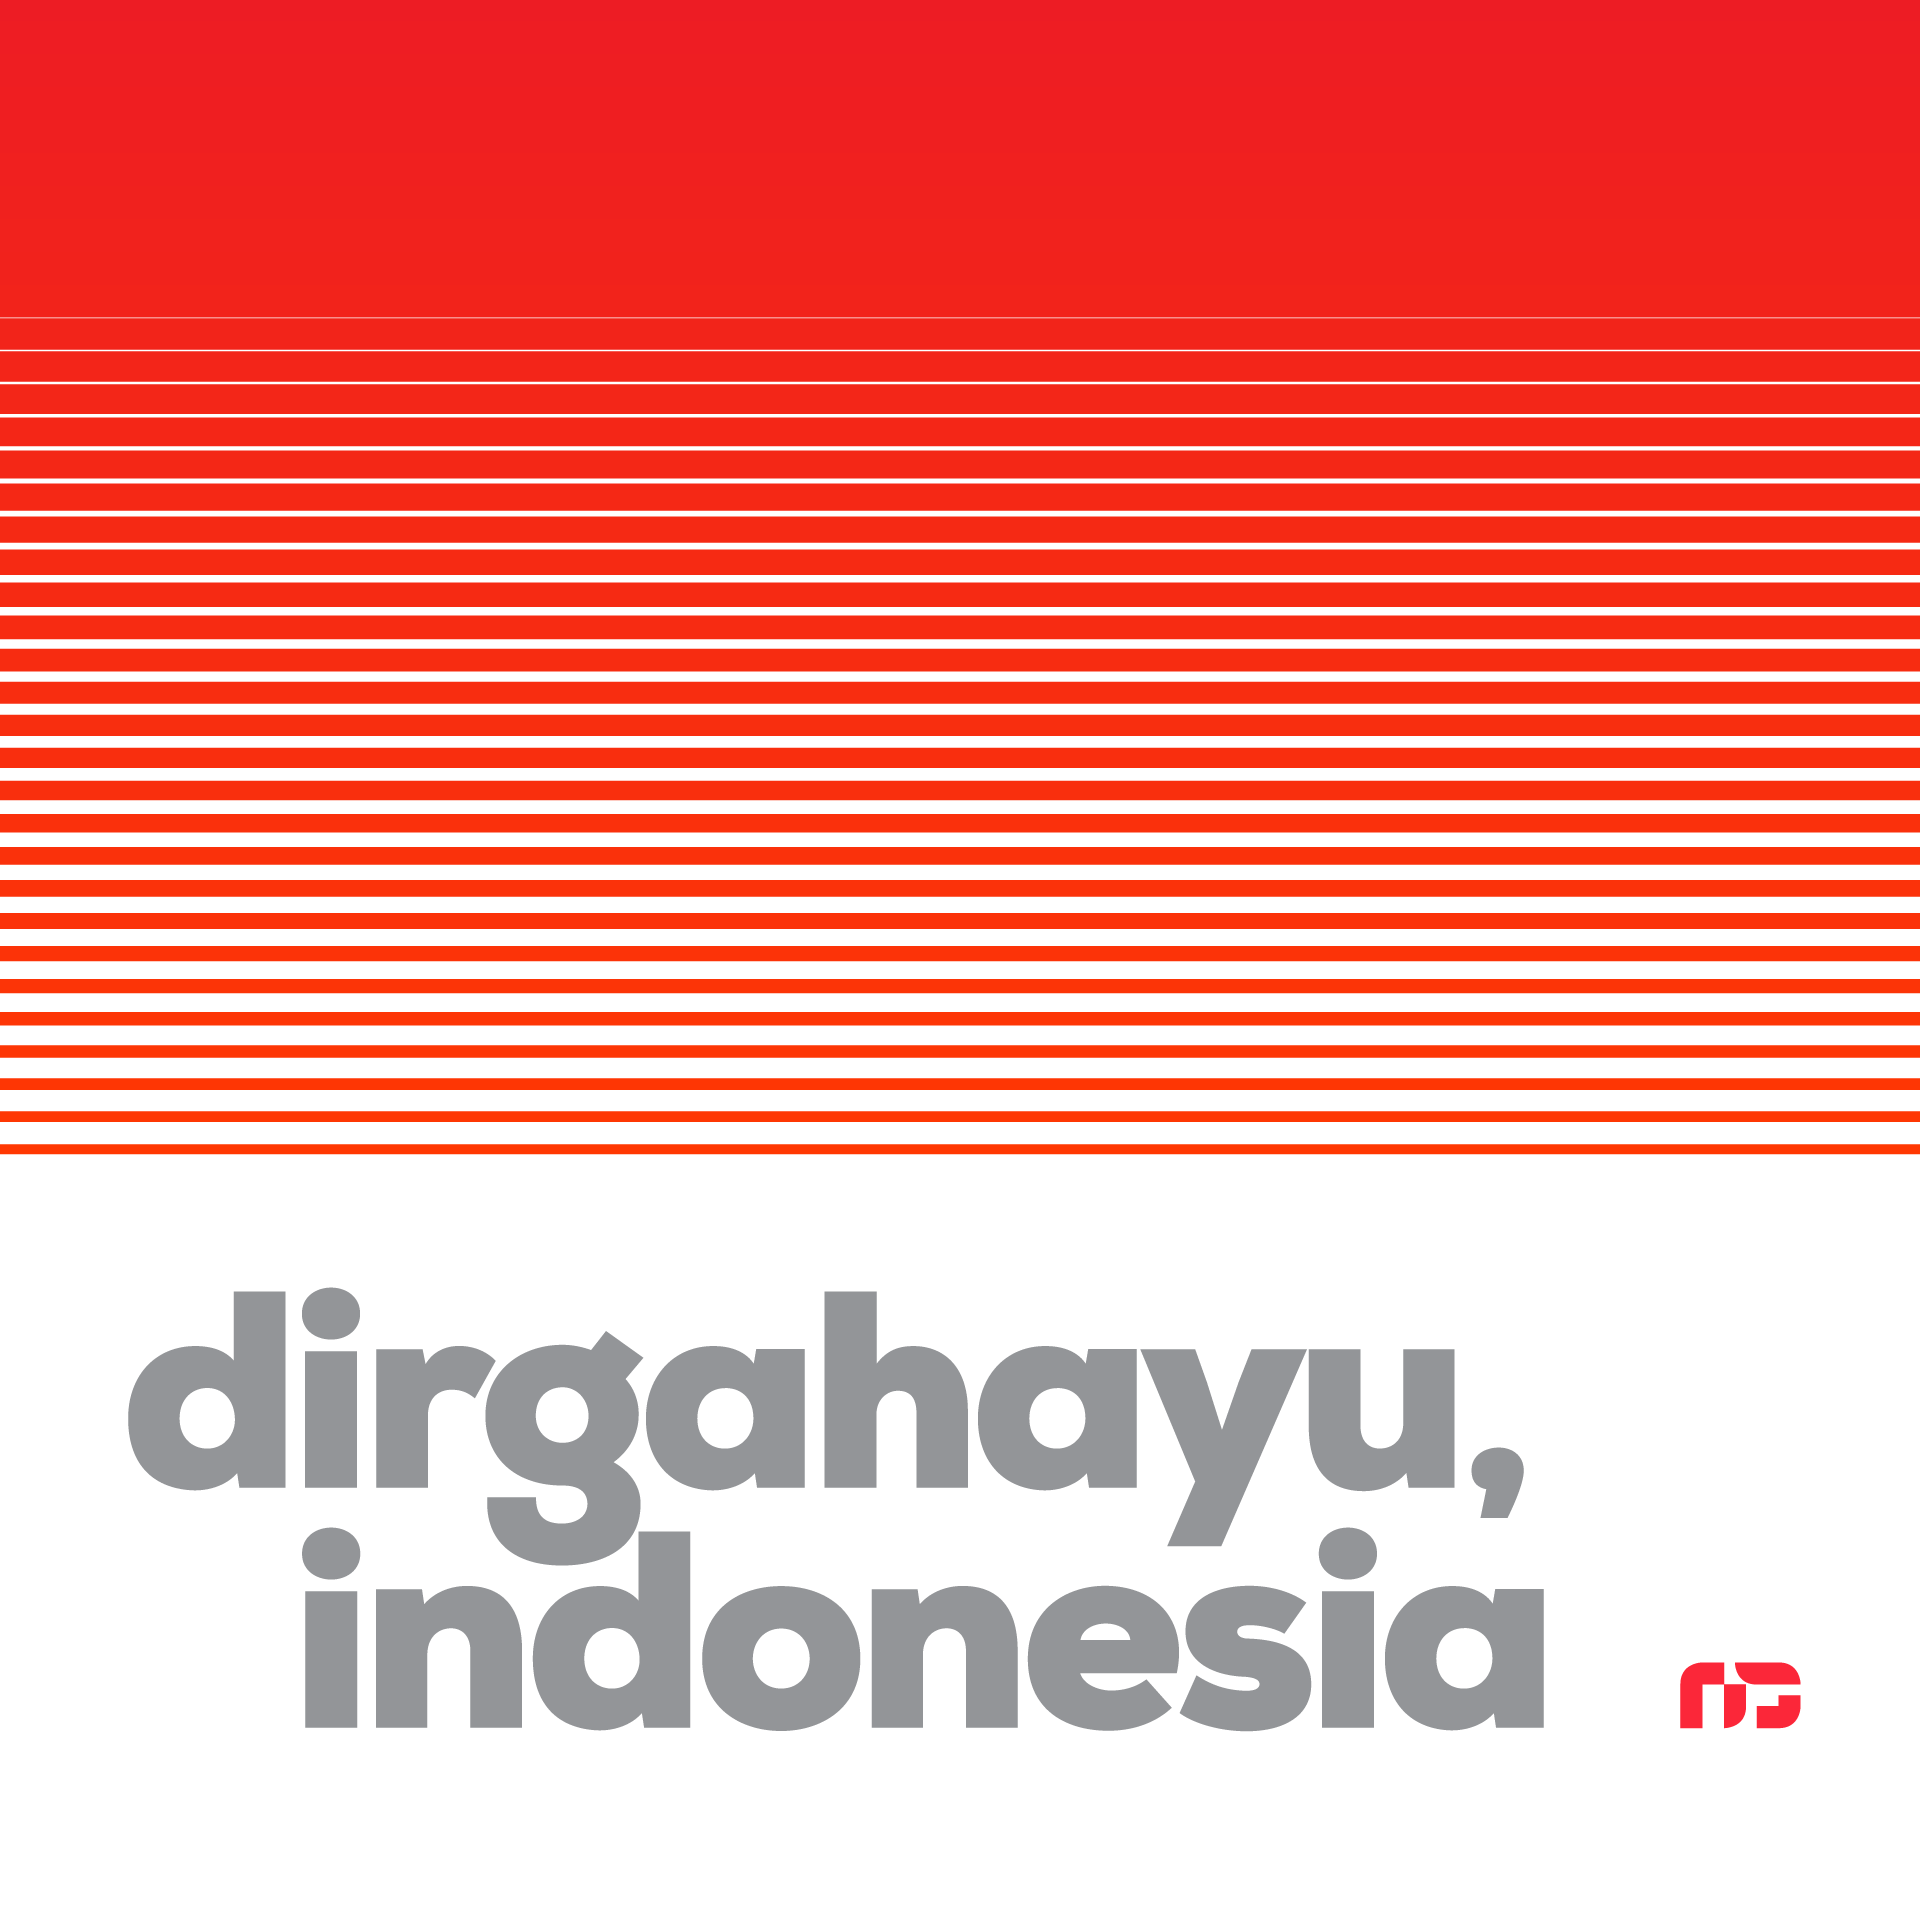 Dirgahayu, Indonesia